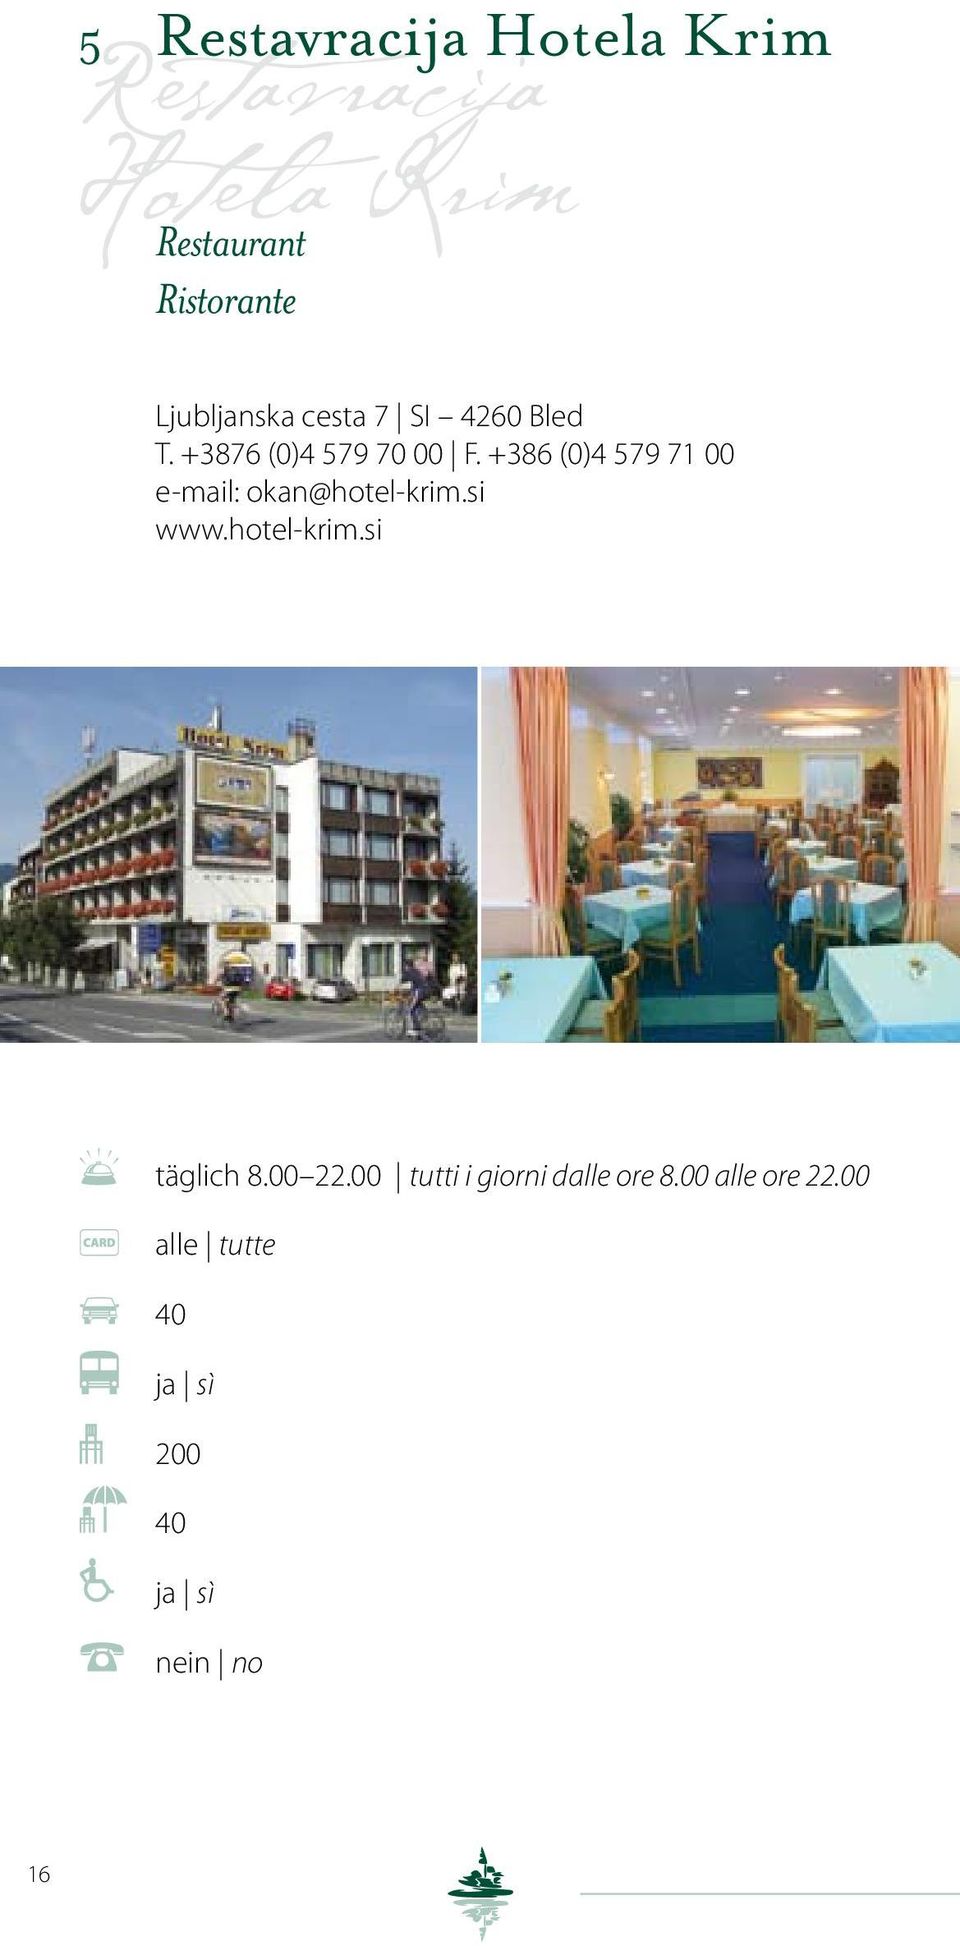 +386 (0)4 579 71 00 e-mail: okan@hotel-krim.si www.hotel-krim.si täglich 8.